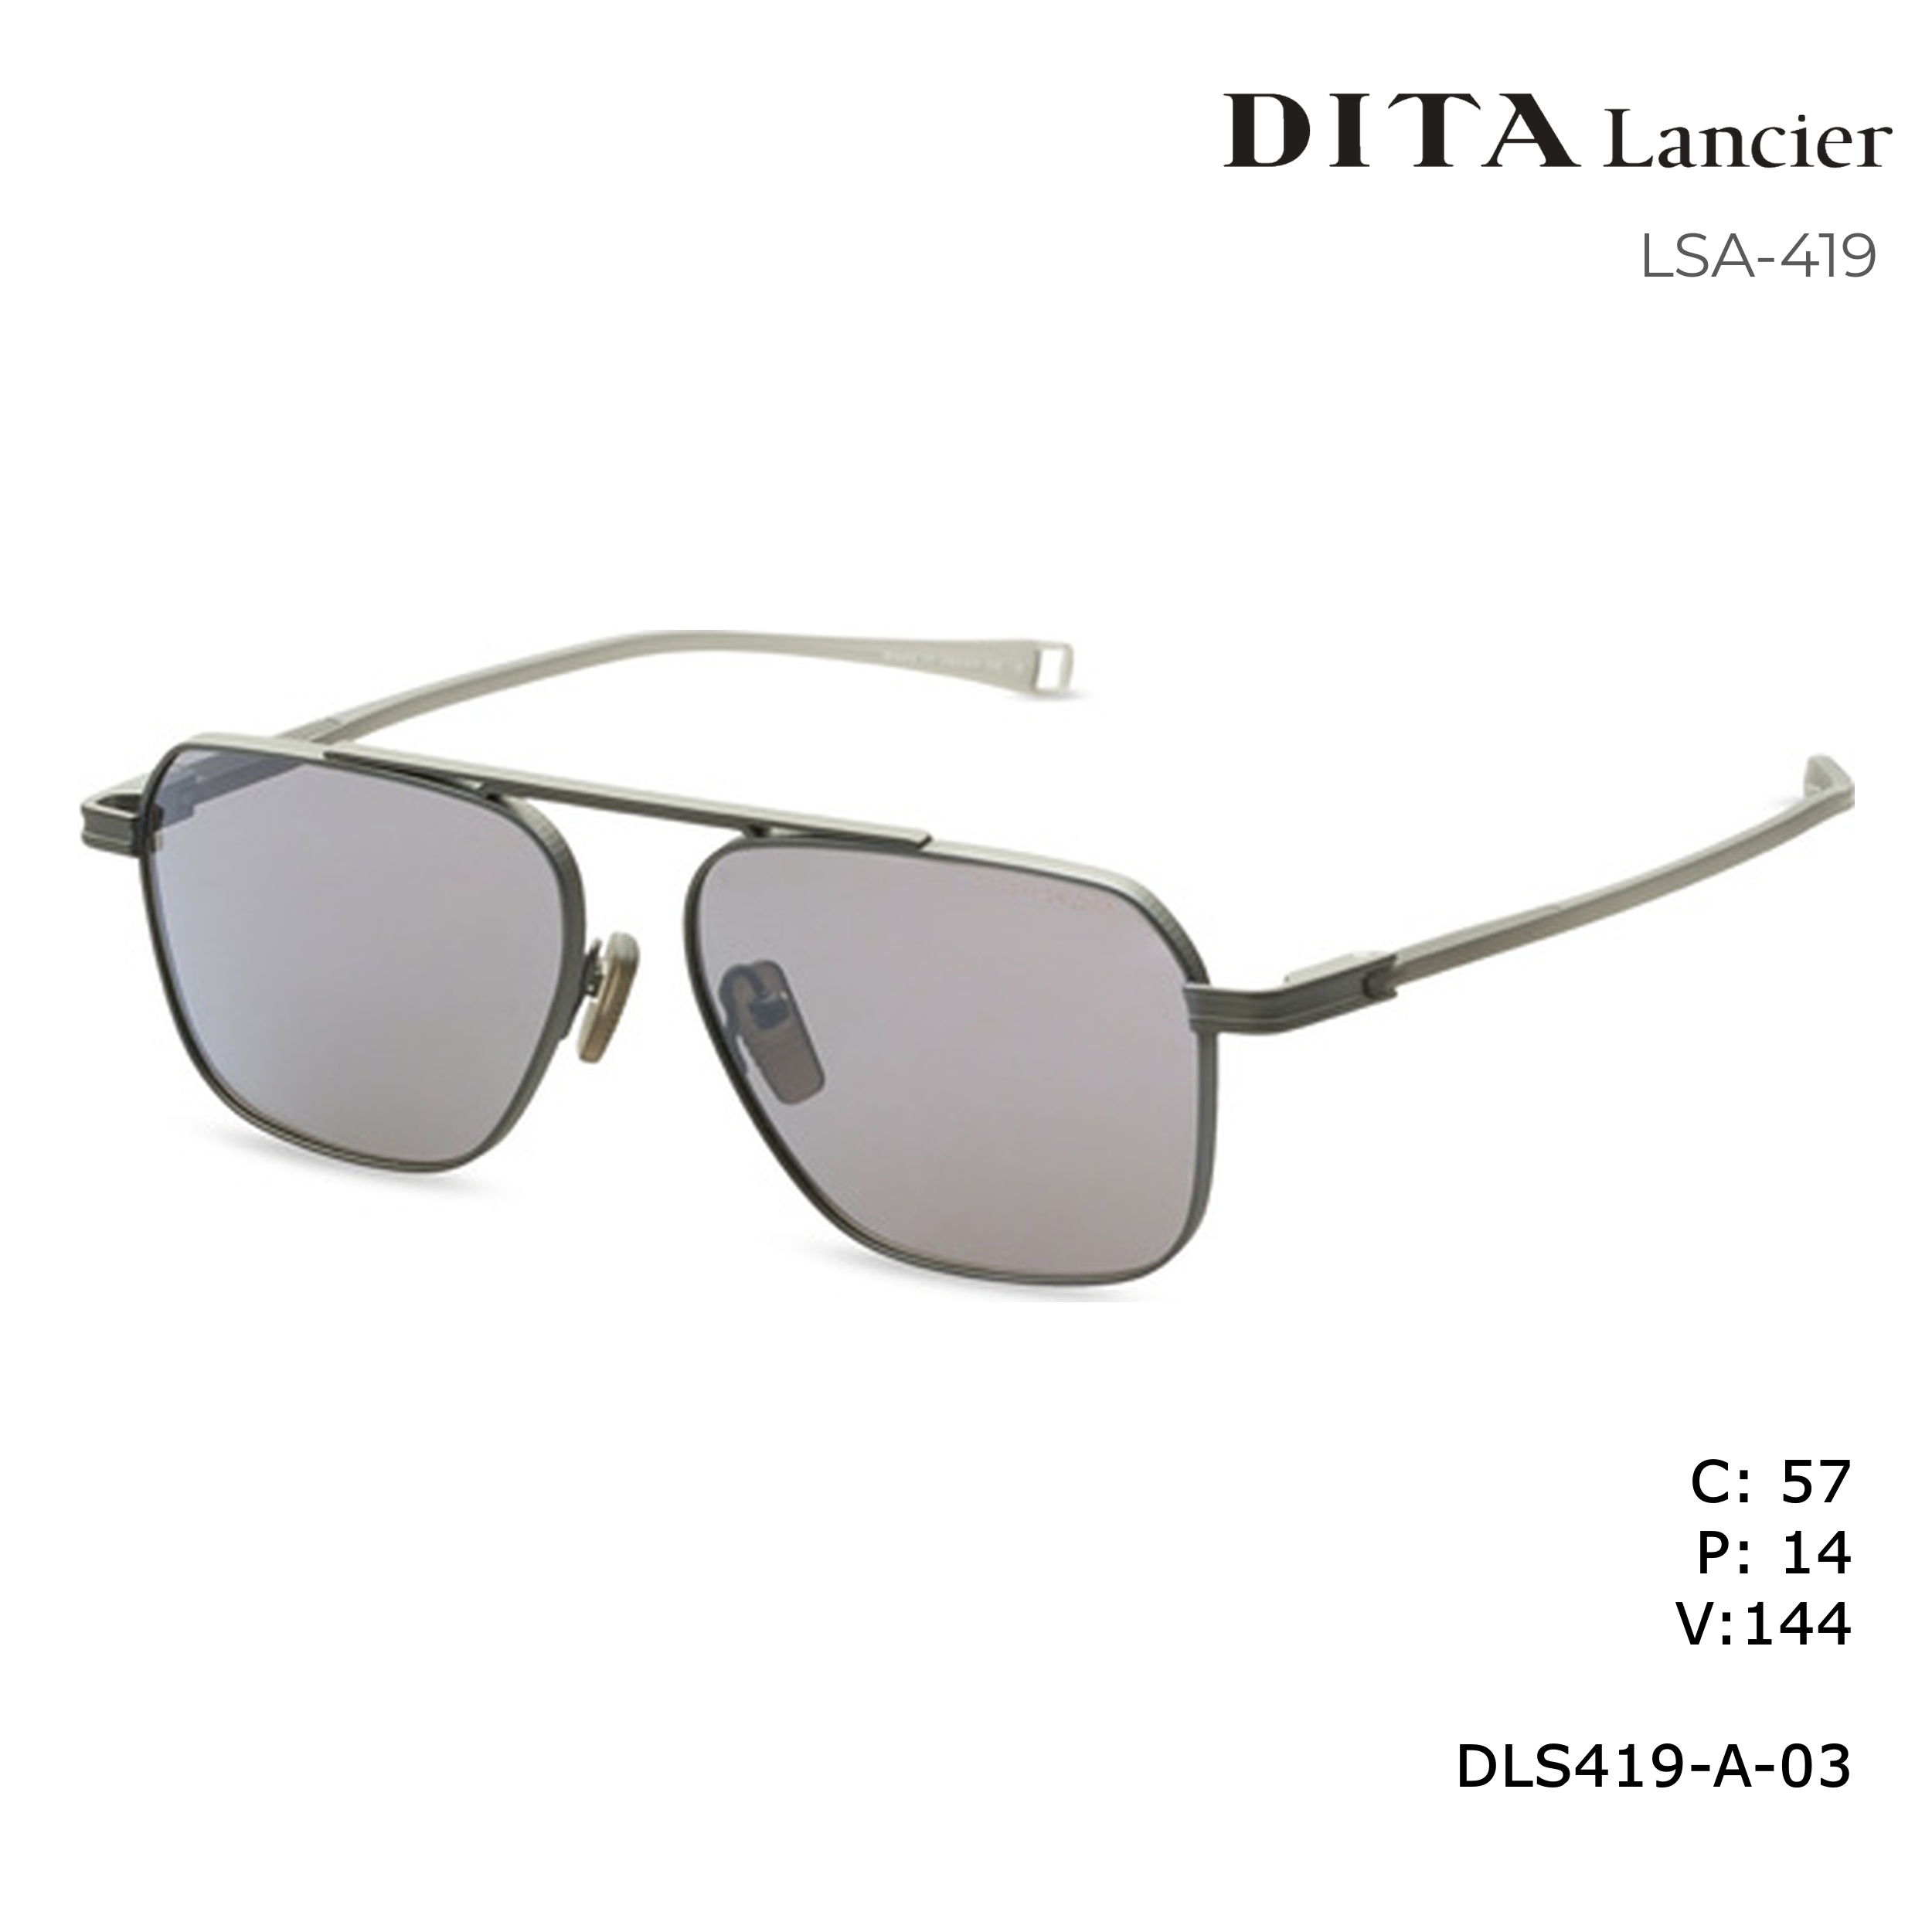 DITA LANCIER Sunglasses LSA-419 Matte Black W/ Sea/POLARIZED – Best ...